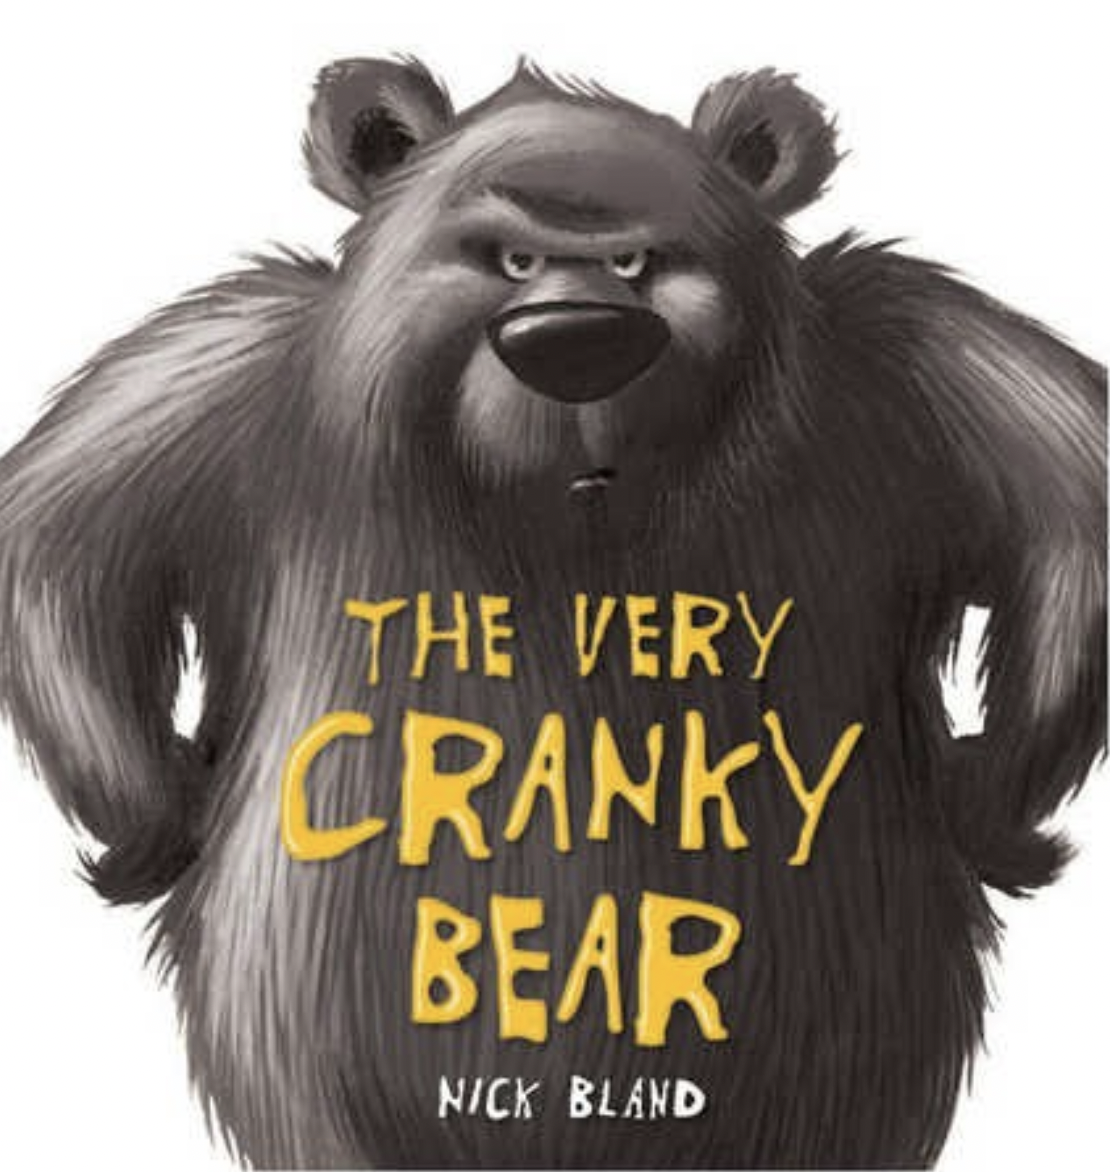 Cranky Bear Board Book by Nick Bland